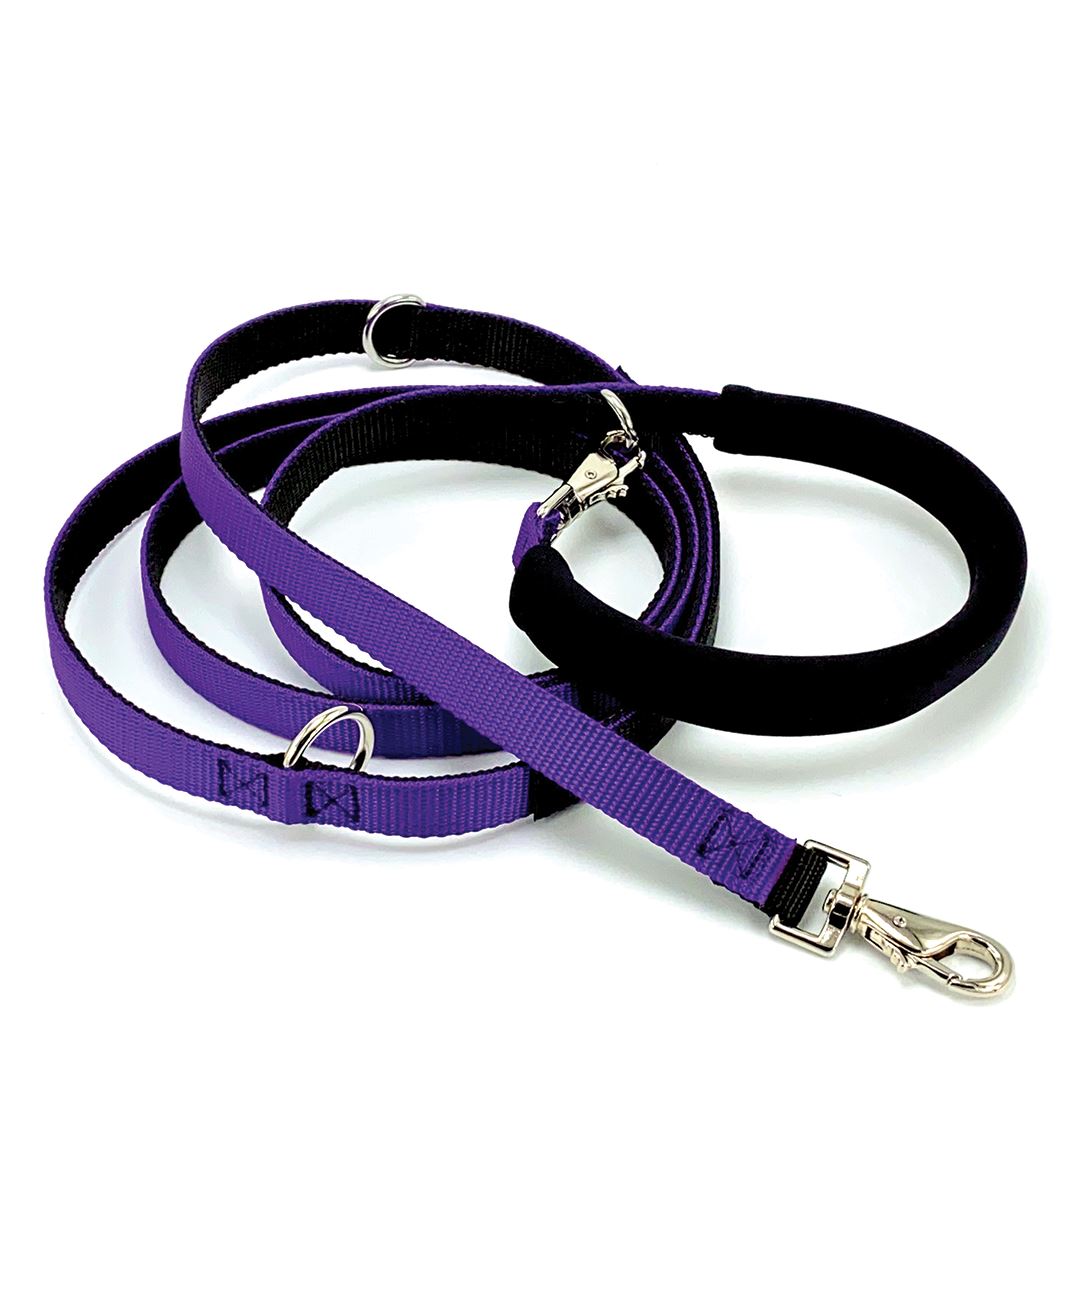 Dolan’s Dog Doodads Cruiser Dog Leash (7 Colors) Leash Dolan's Dog Doo-Dads Purple 7' Leash 